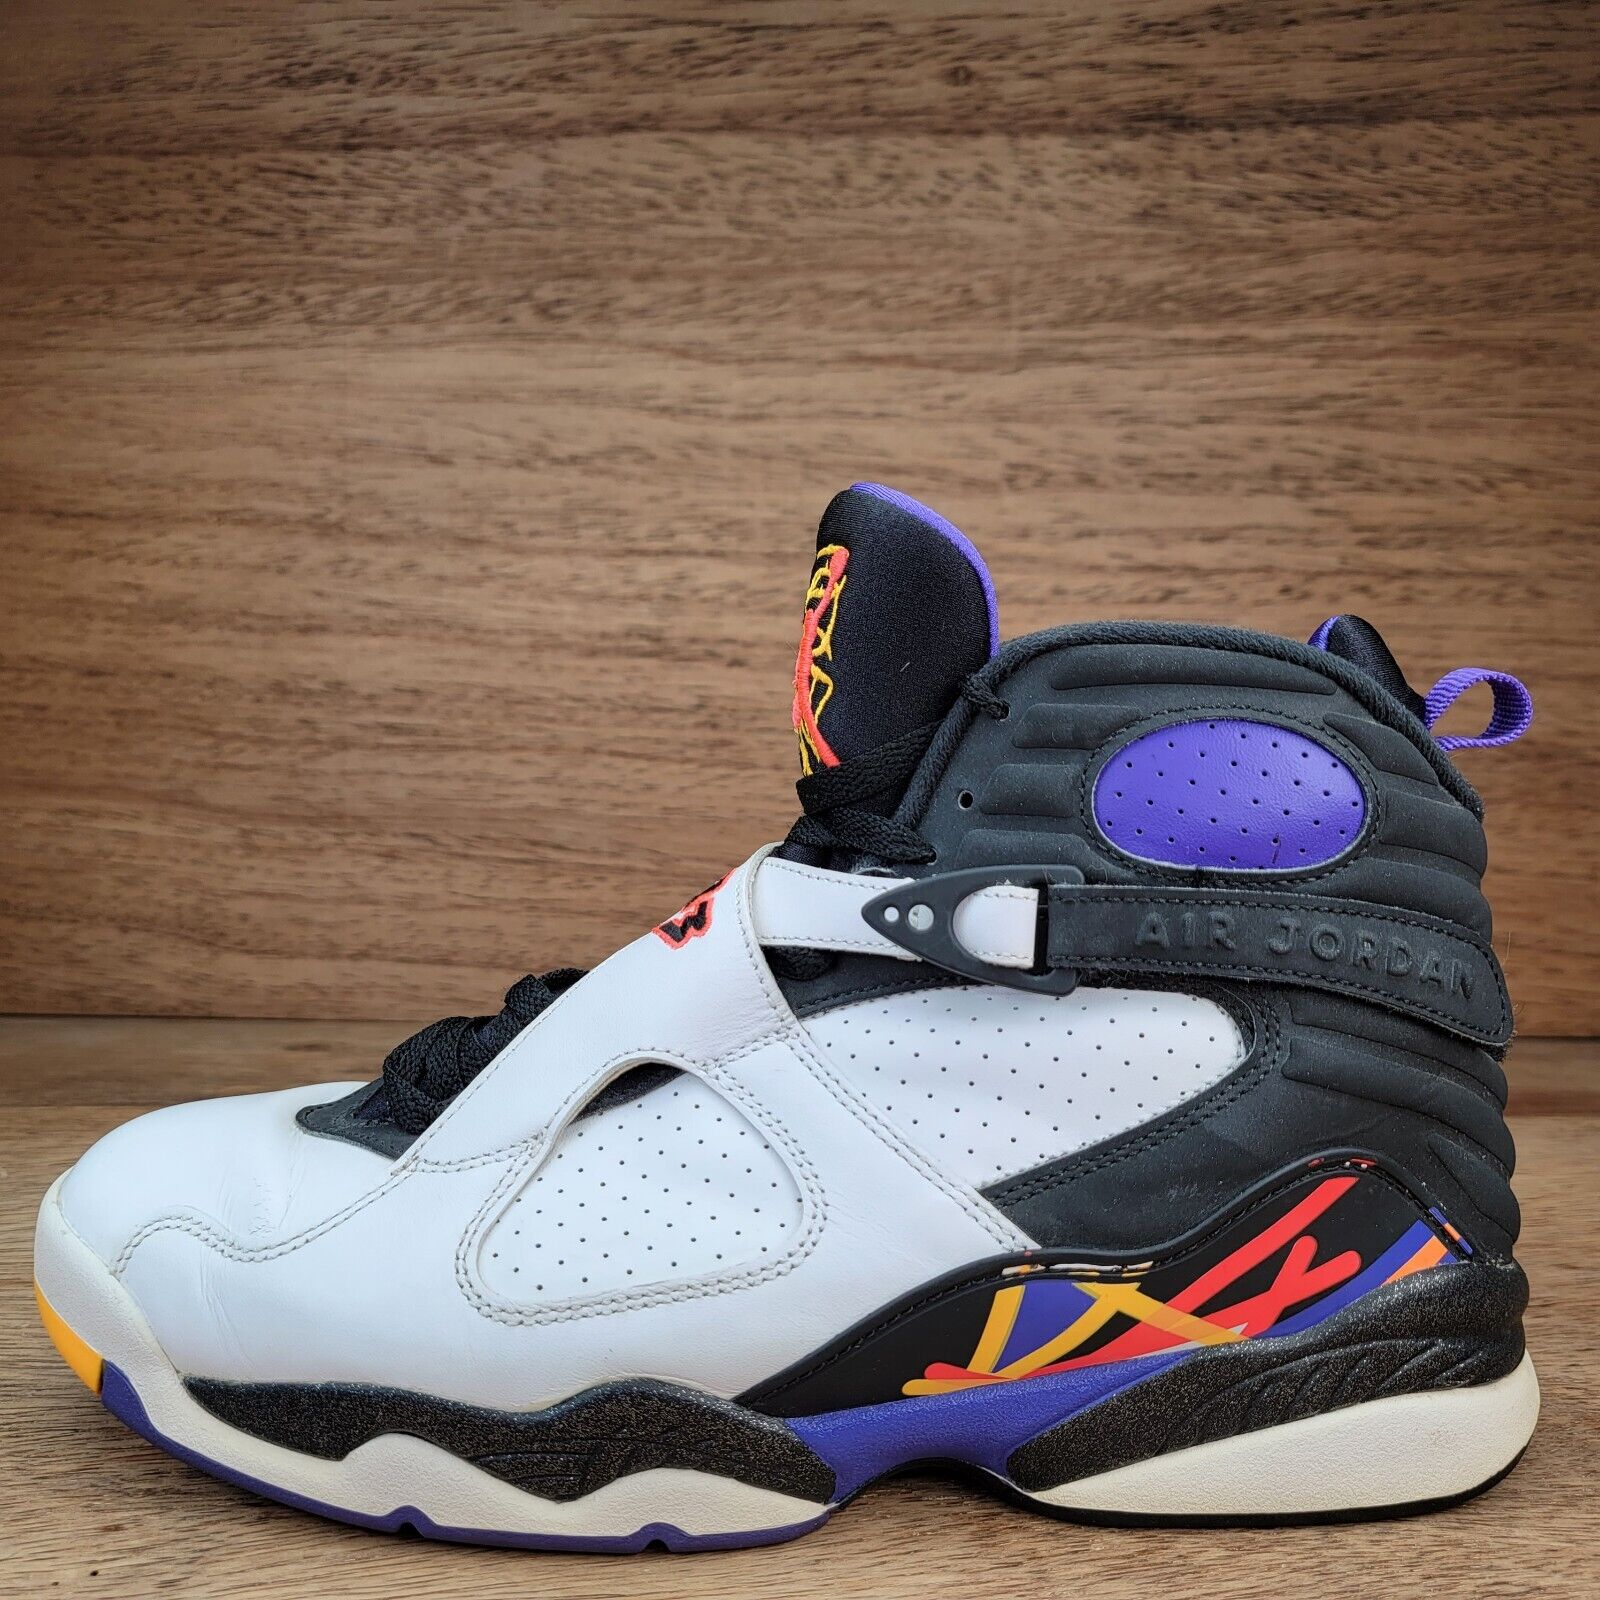 Air Jordan 8 Retro Men's Basketball Shoes Three Peat 305381-142 Lot Size 11.5